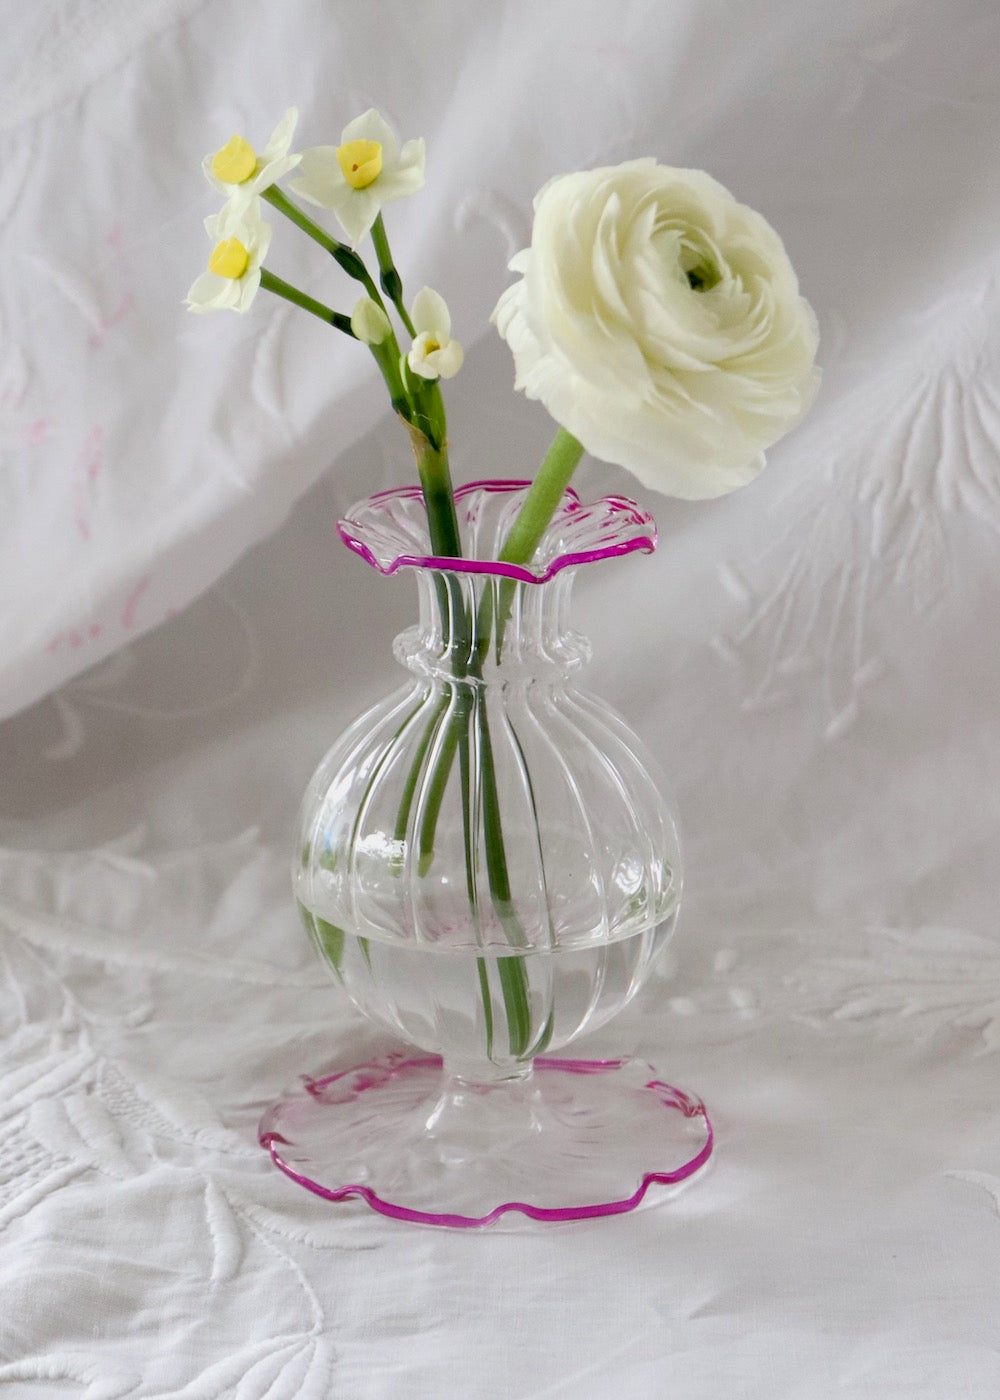 NEW IN: Nanu Glass Vase - Hot Pink